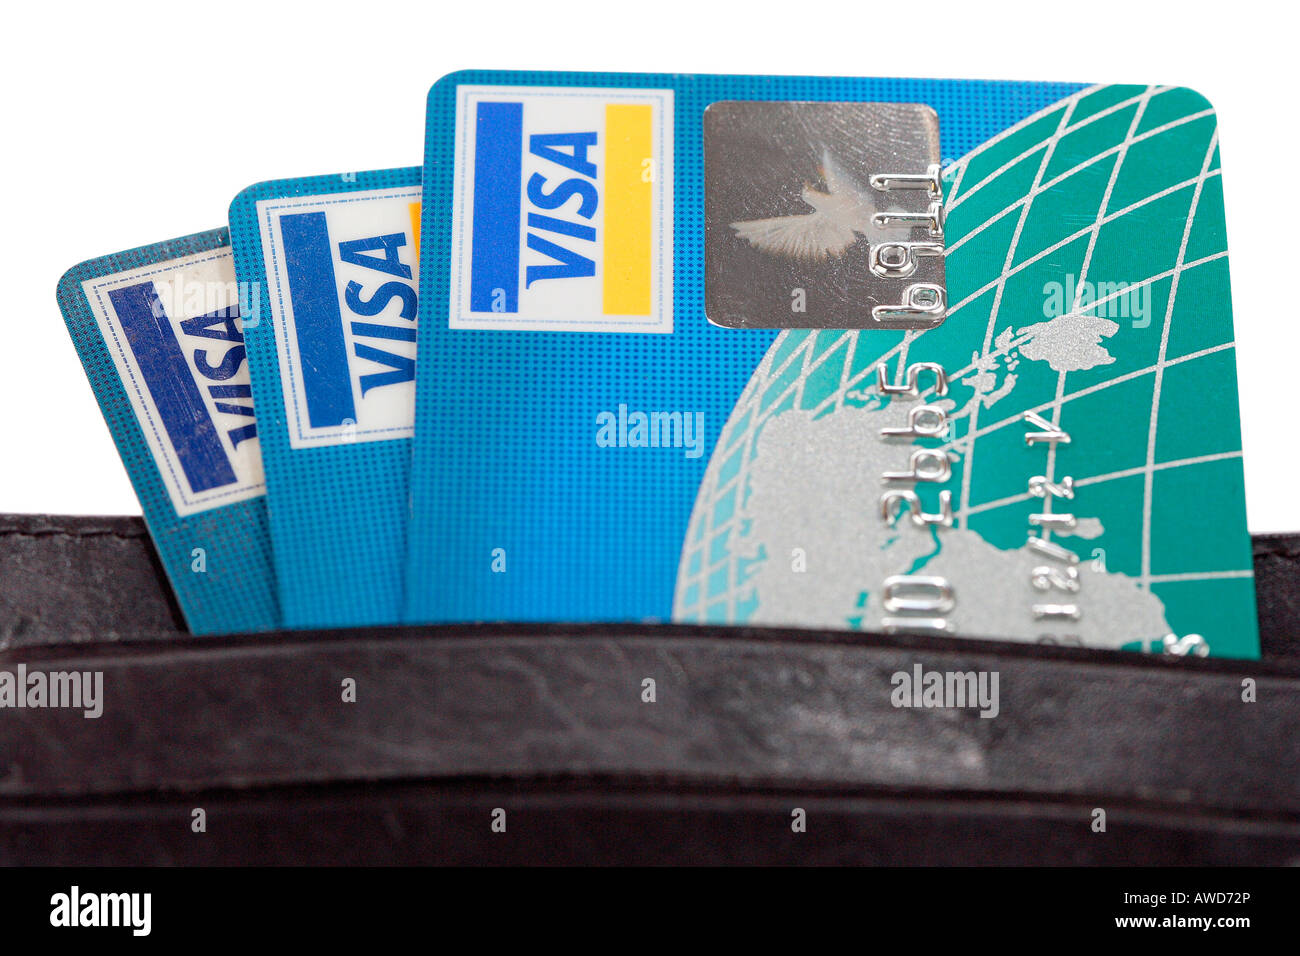 VISA credit cards inside a purse Stock Photo